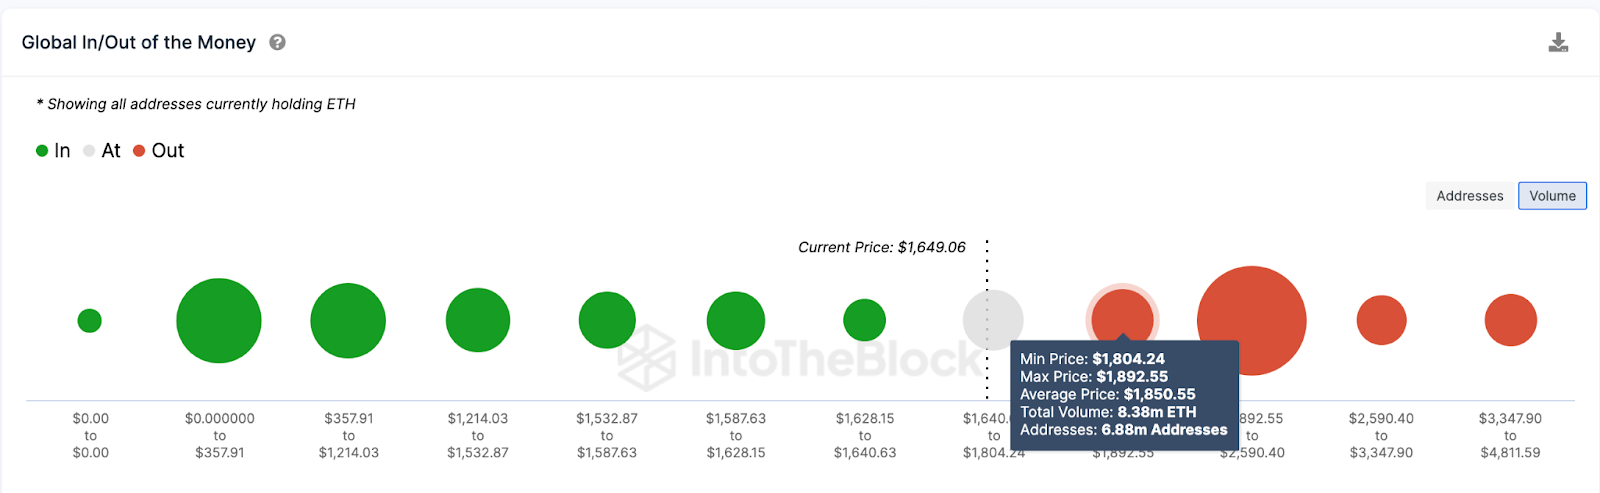 Ethereum (ETH)  Price Prediction | GIOM data